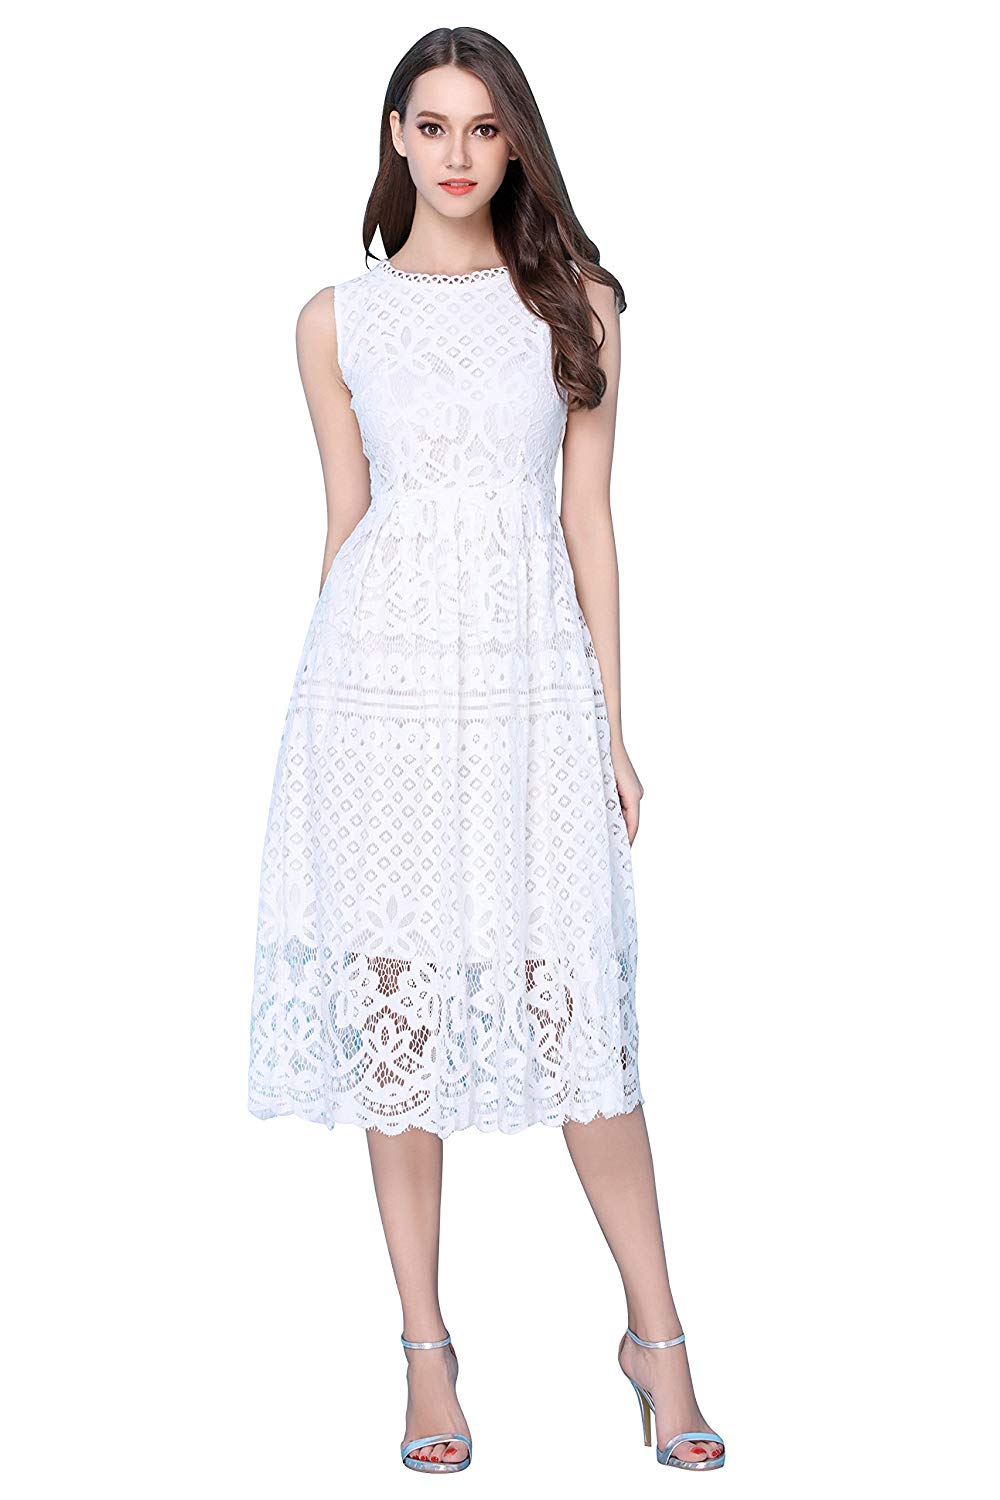 White Lace Sleeveless Tea Length Prom Dresses